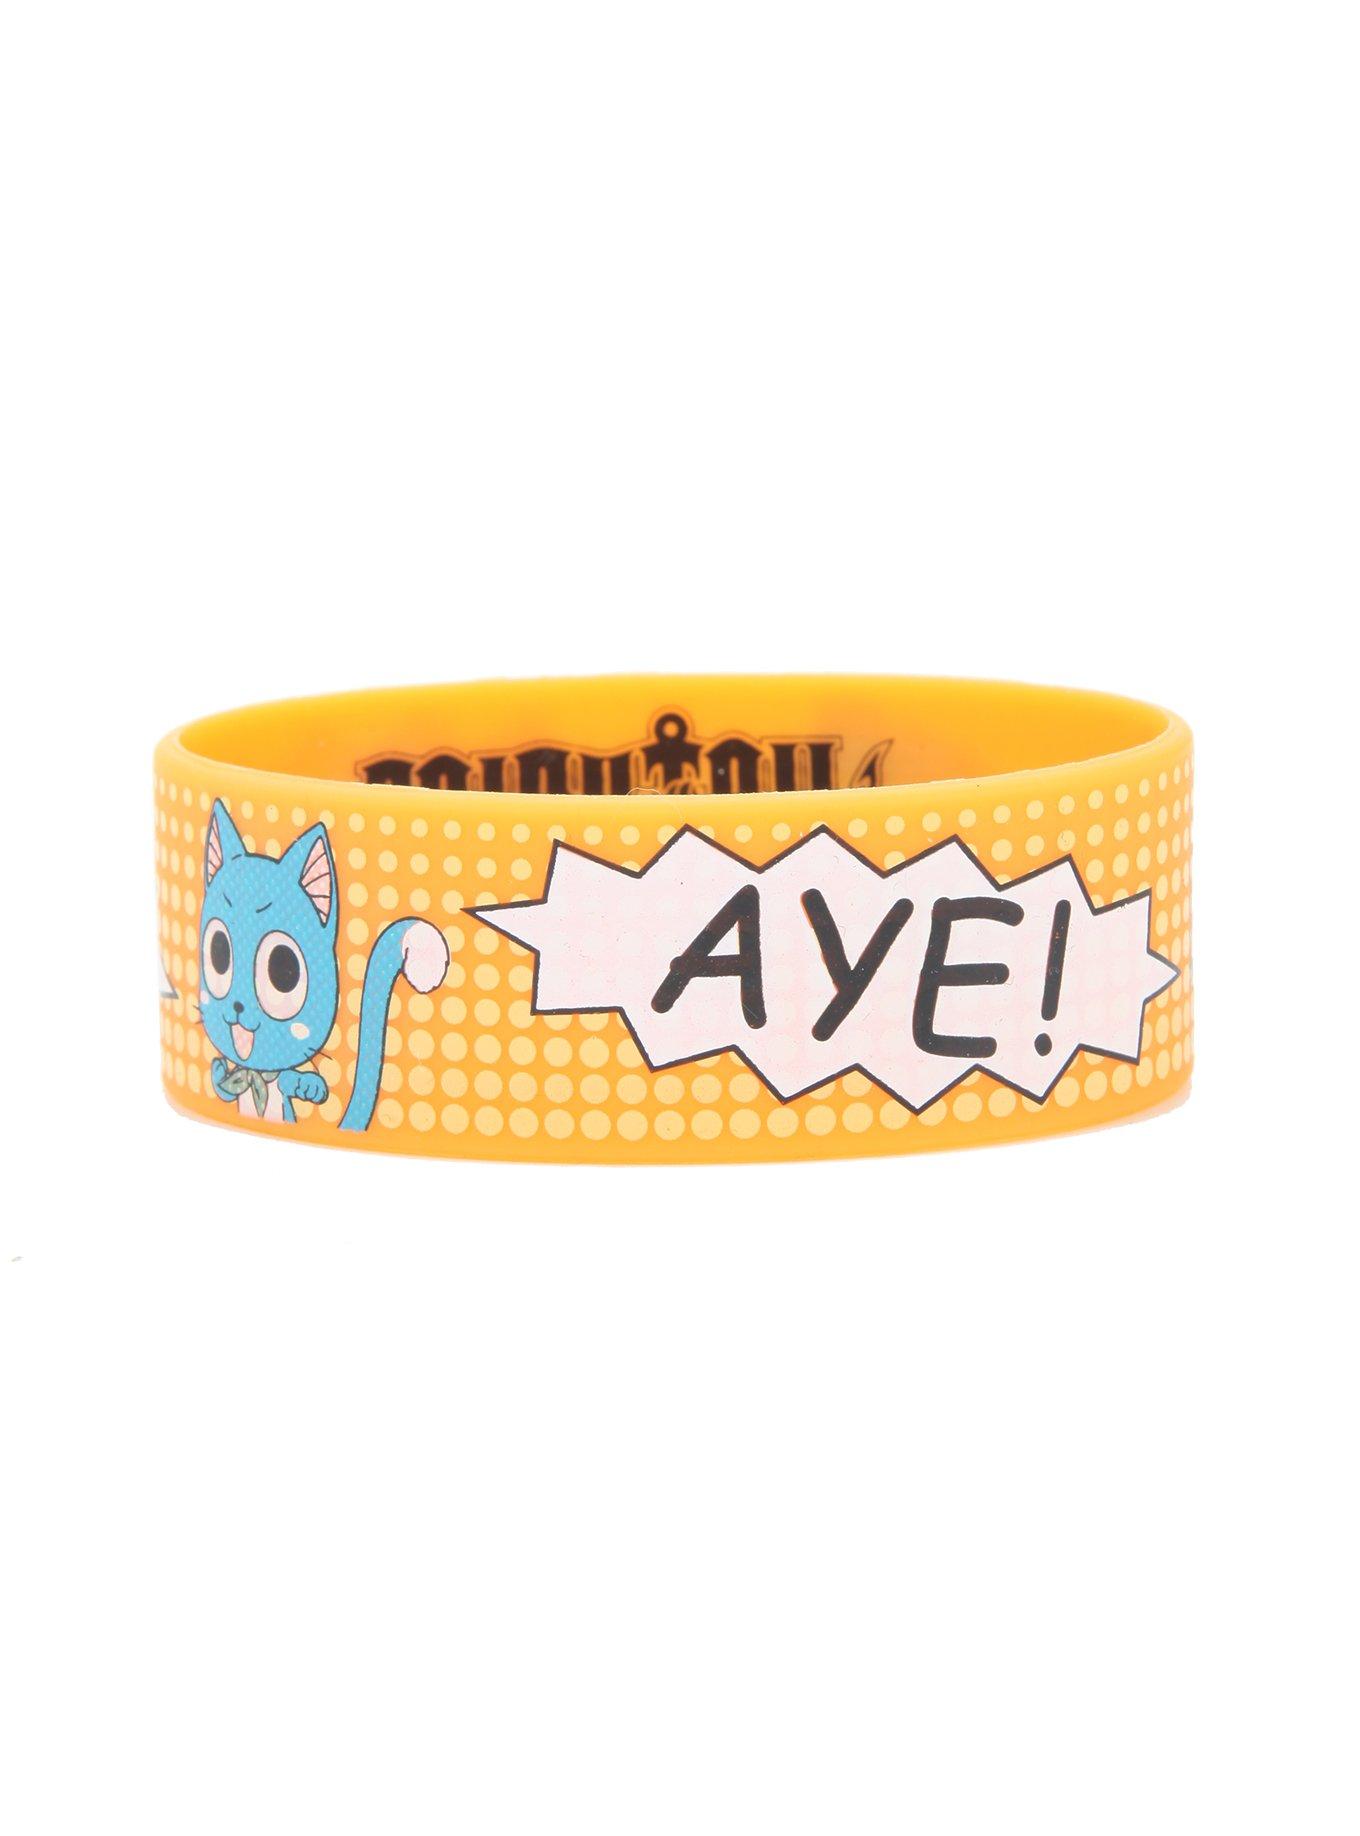 Fairy Tail Happy Aye! Rubber Bracelet, , hi-res